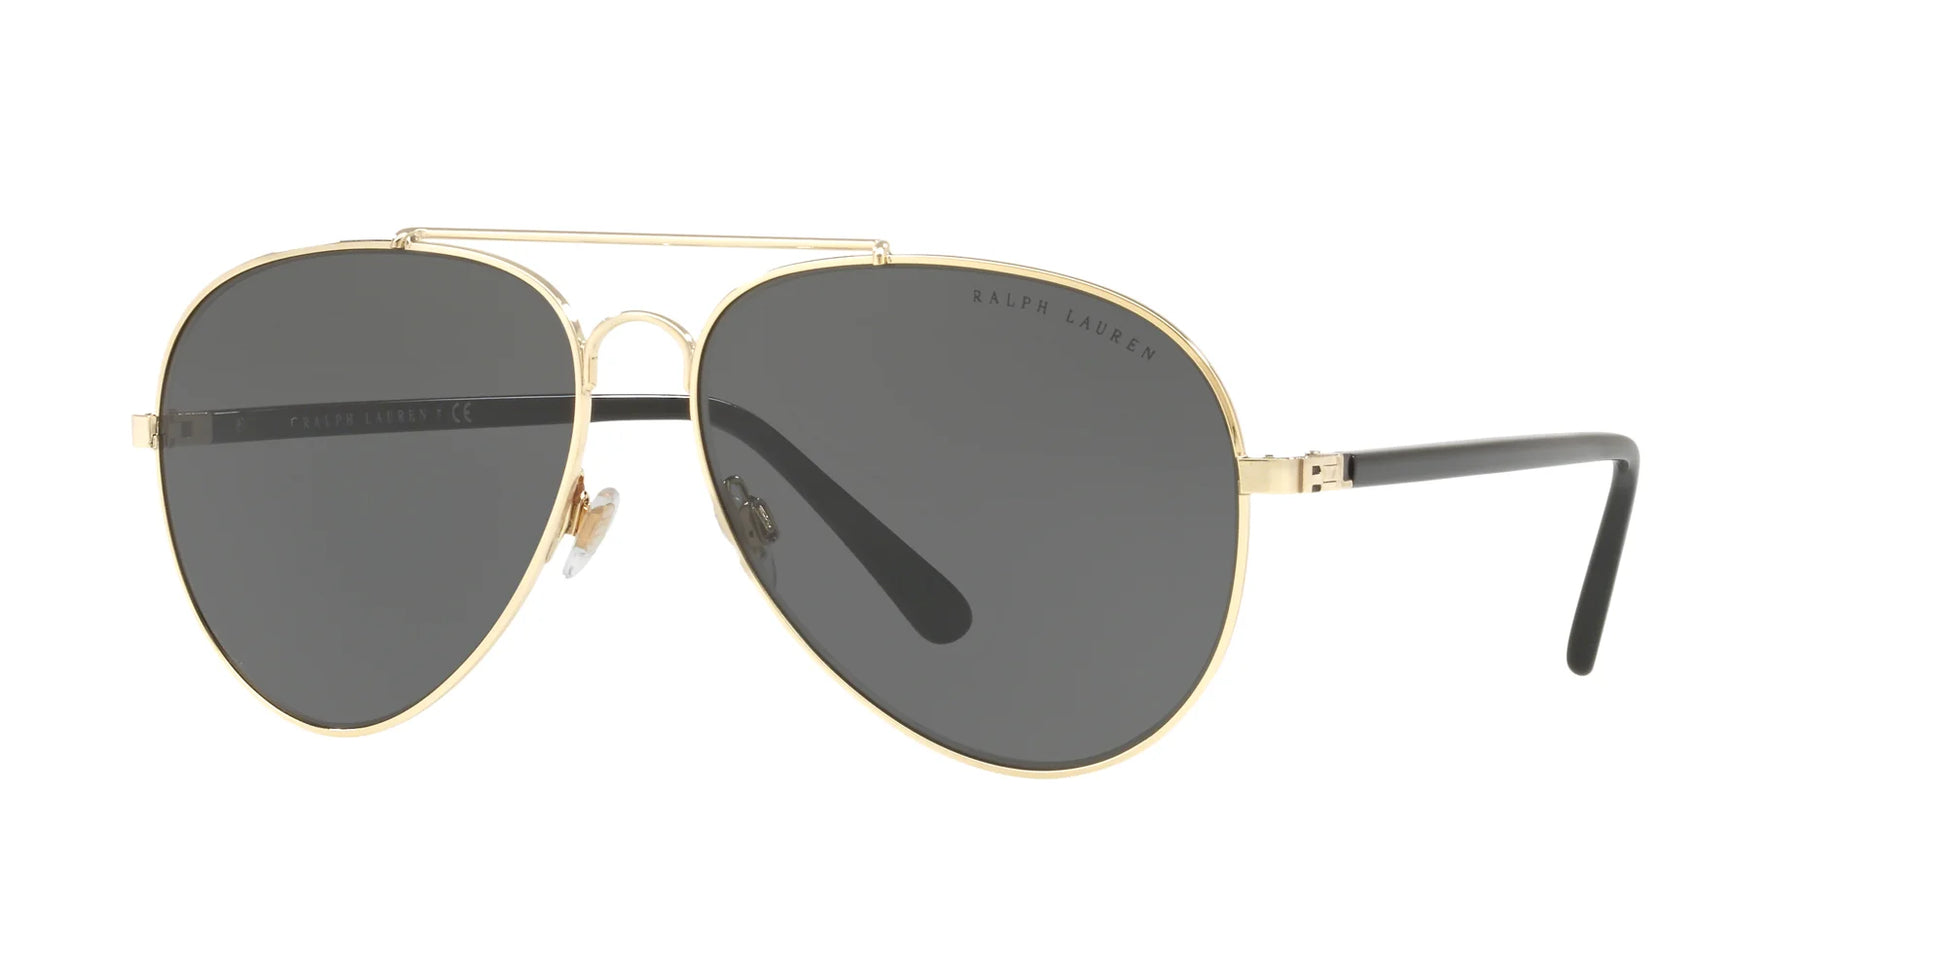 Ralph Lauren RL7058 Sunglasses Shiny Pale Gold / Grey